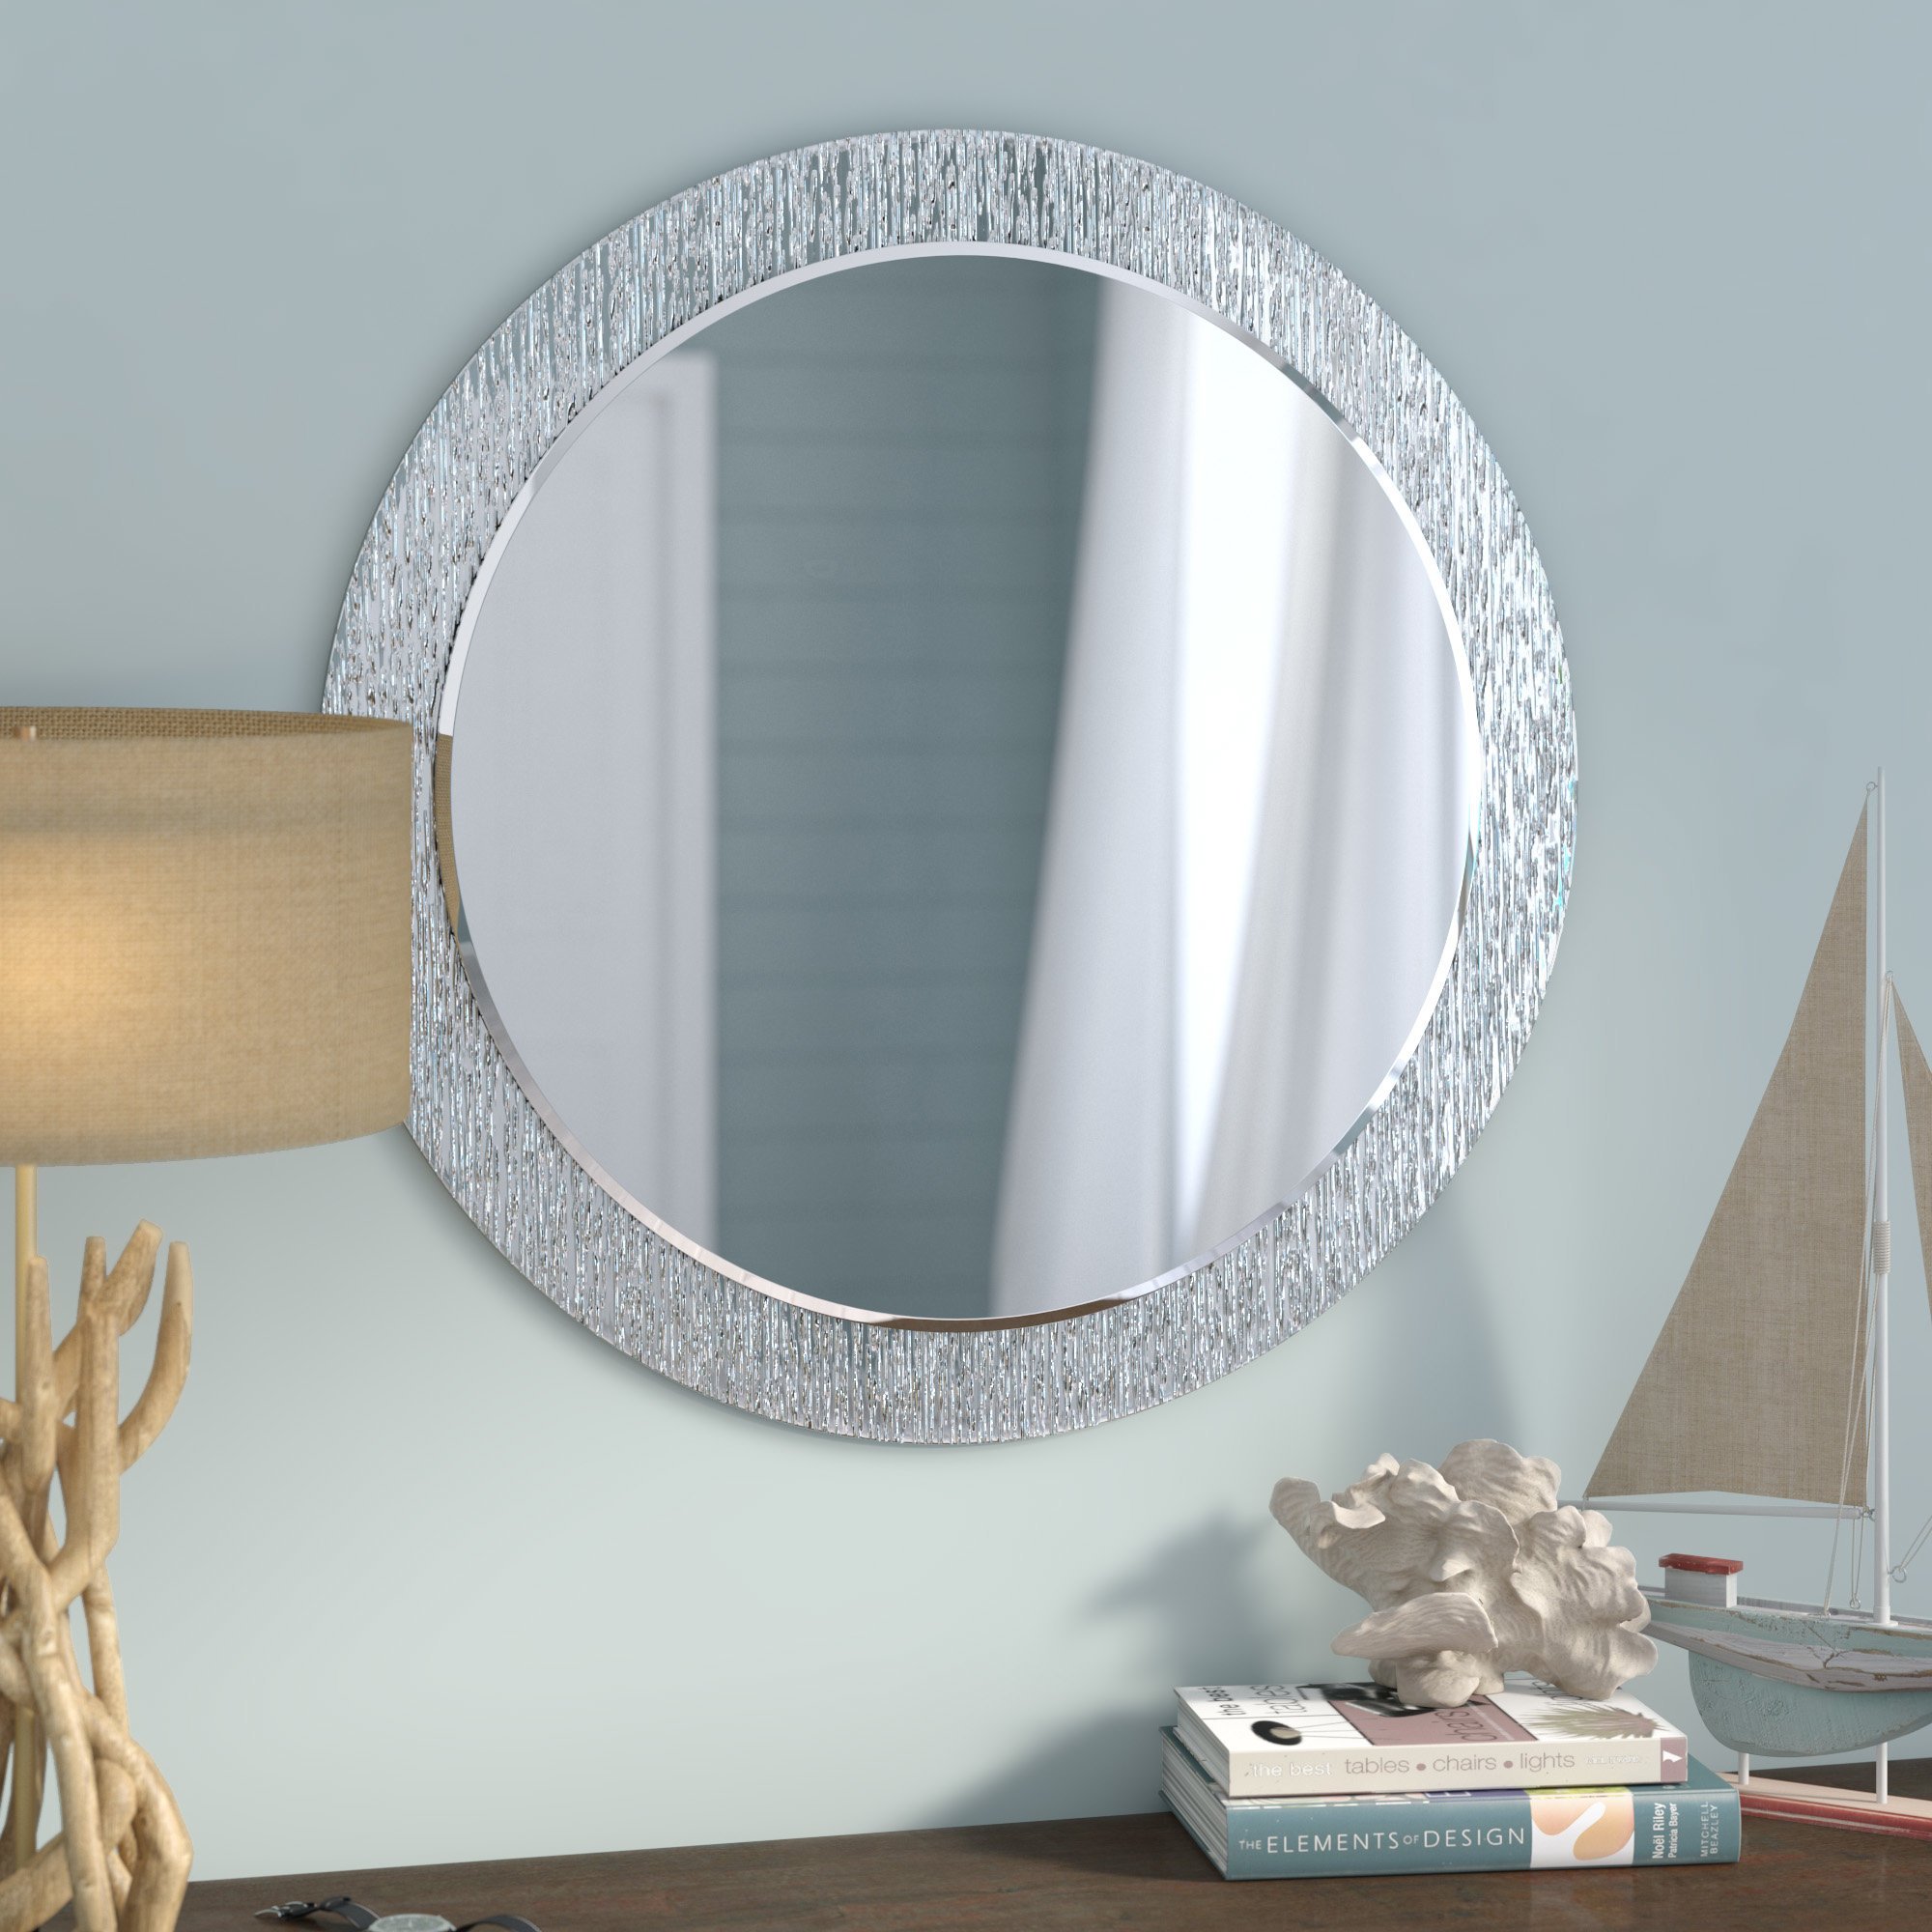 Зеркала 2021 купить. Зеркало Silver Mirrors. Круглое настенное зеркало Buell Glam Accent Mirror. Зеркало для спальни настенное. Круглое зеркало в спальне.